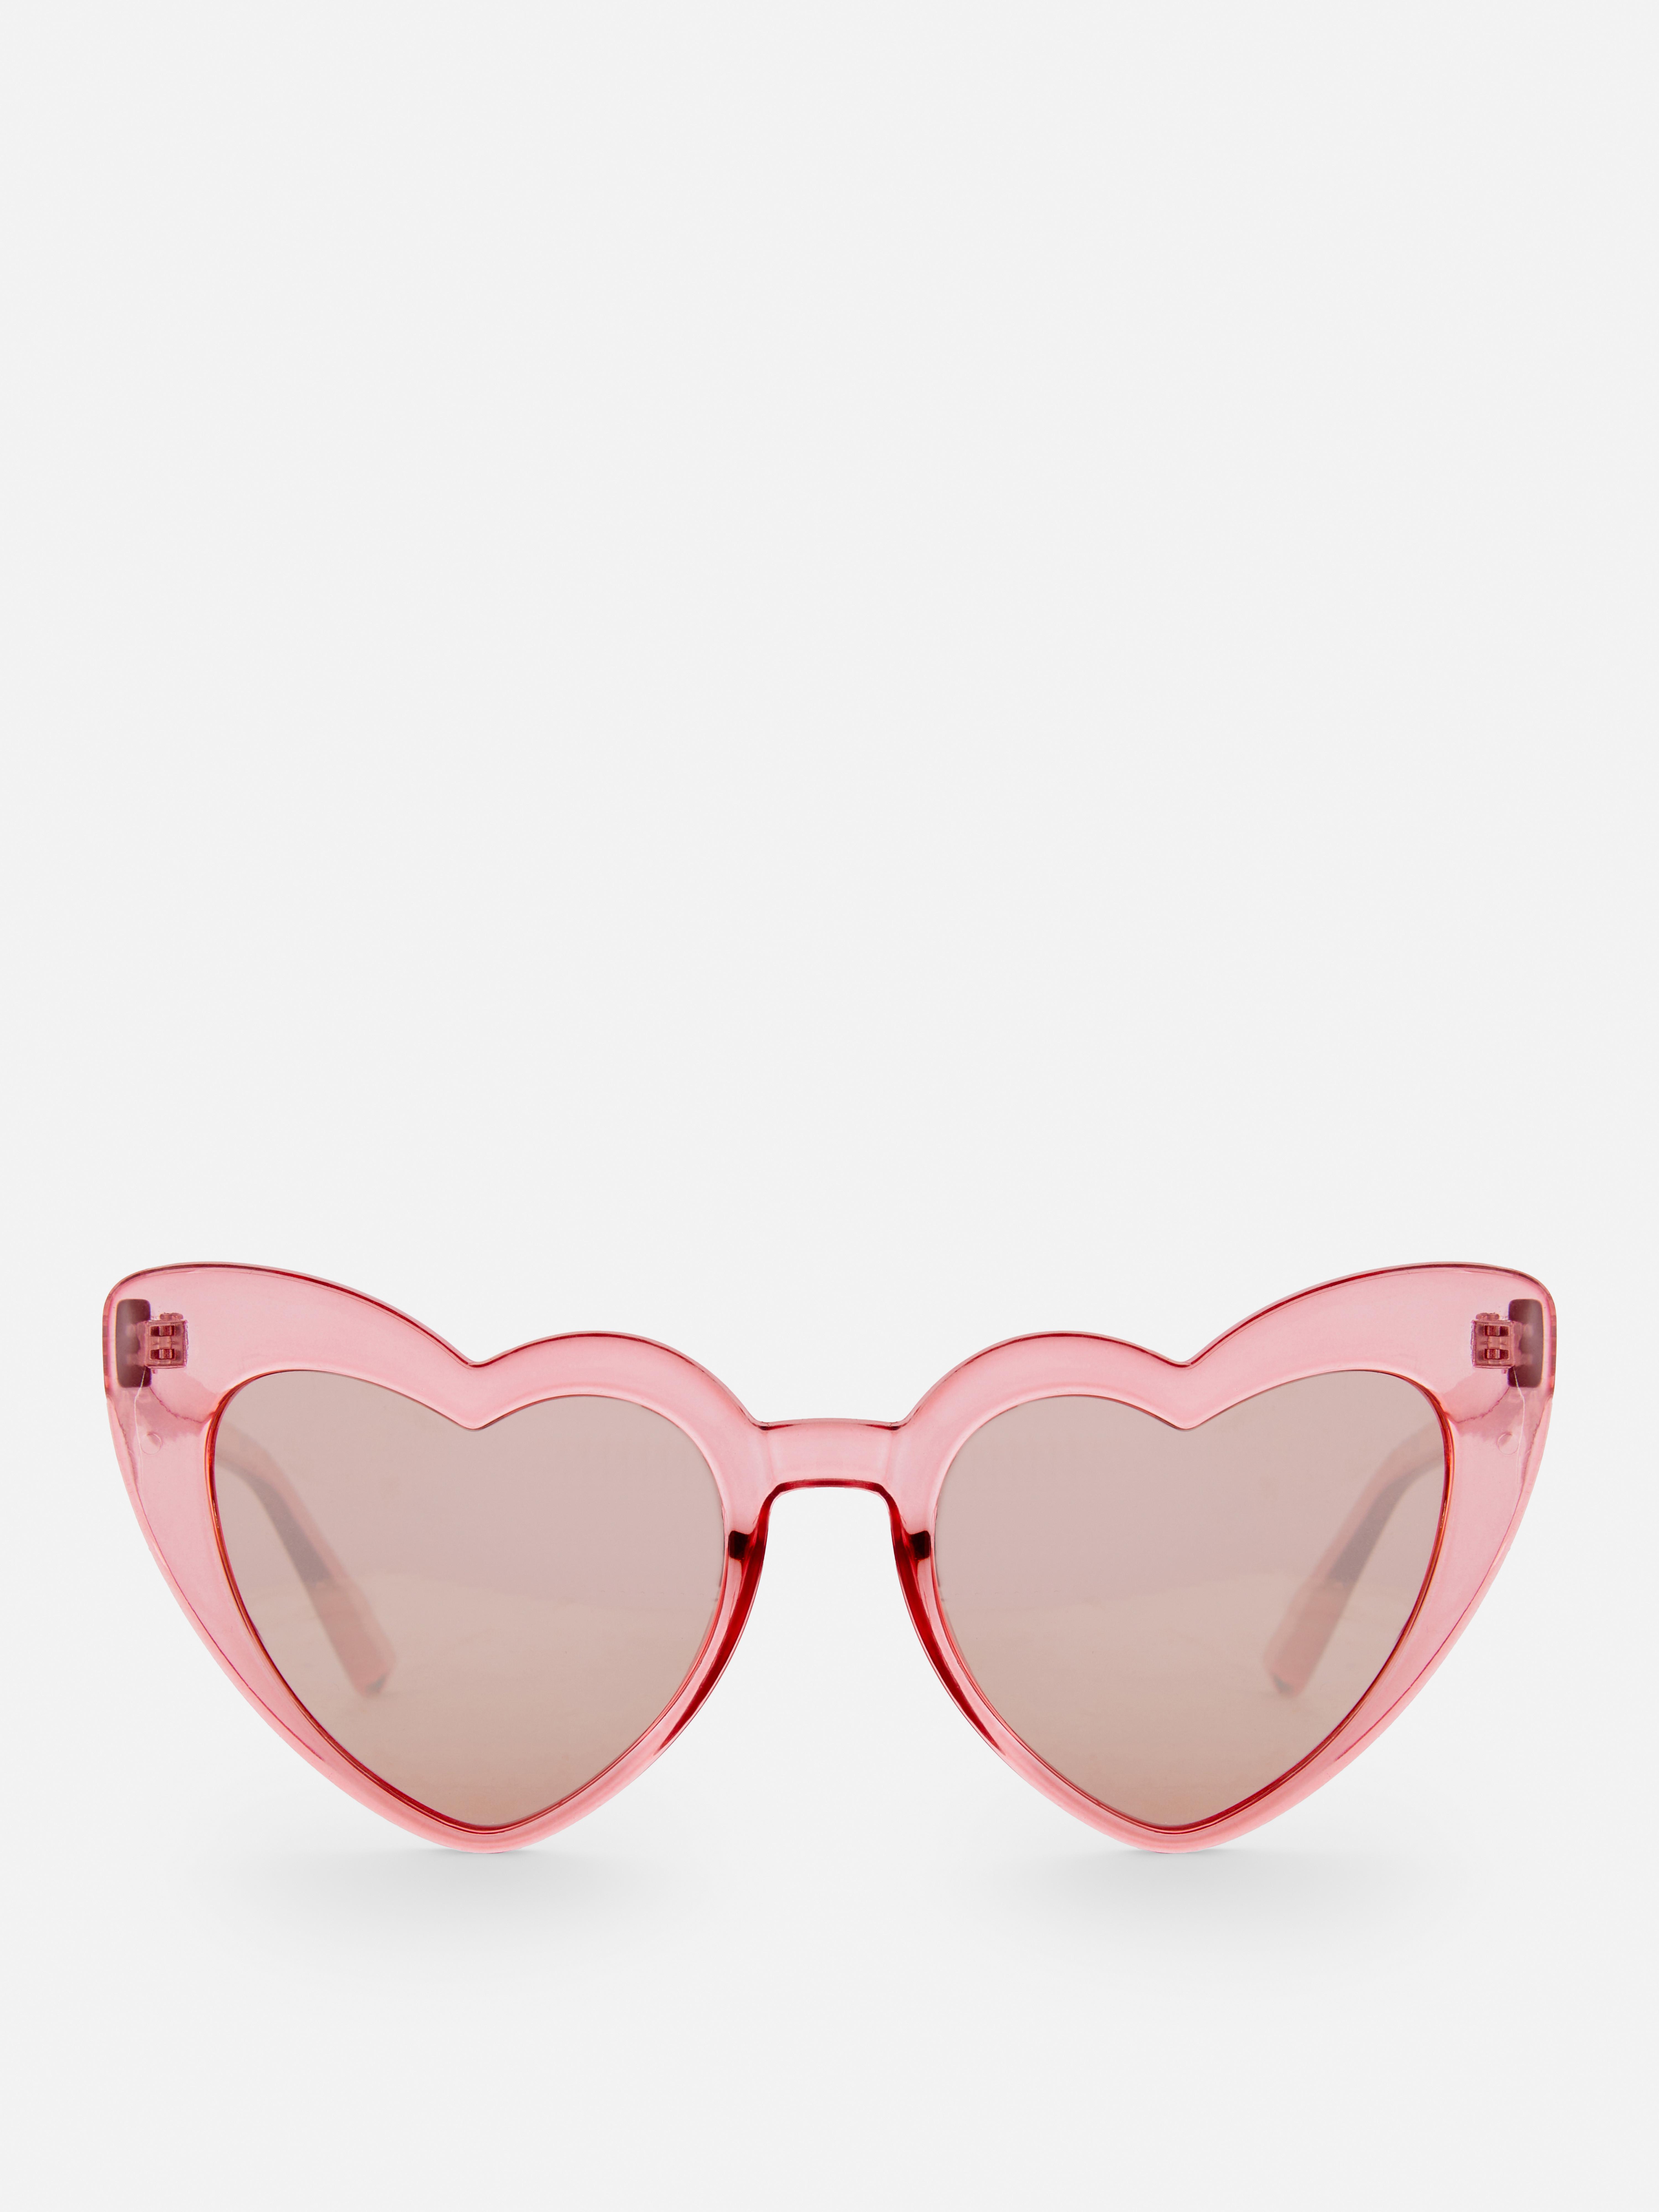 Heart Shaped Tinted Sunglasses